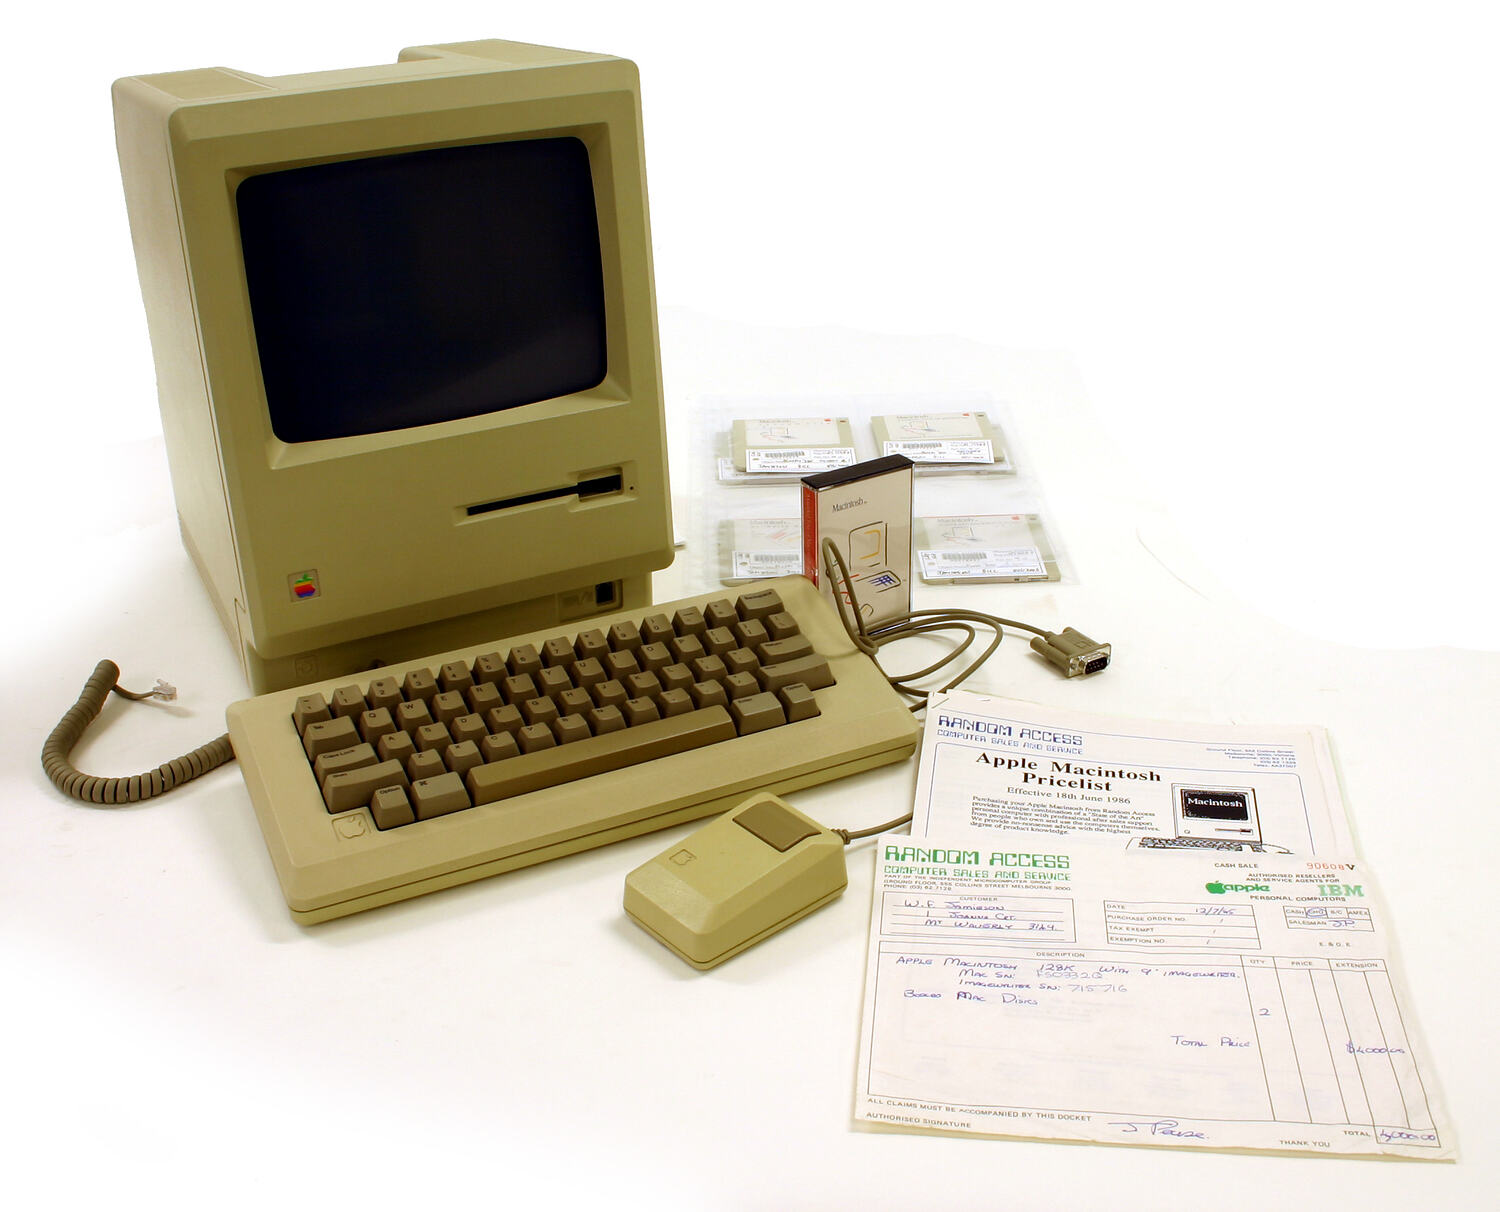 Personal Computer System - Apple Macintosh 128k, 1984